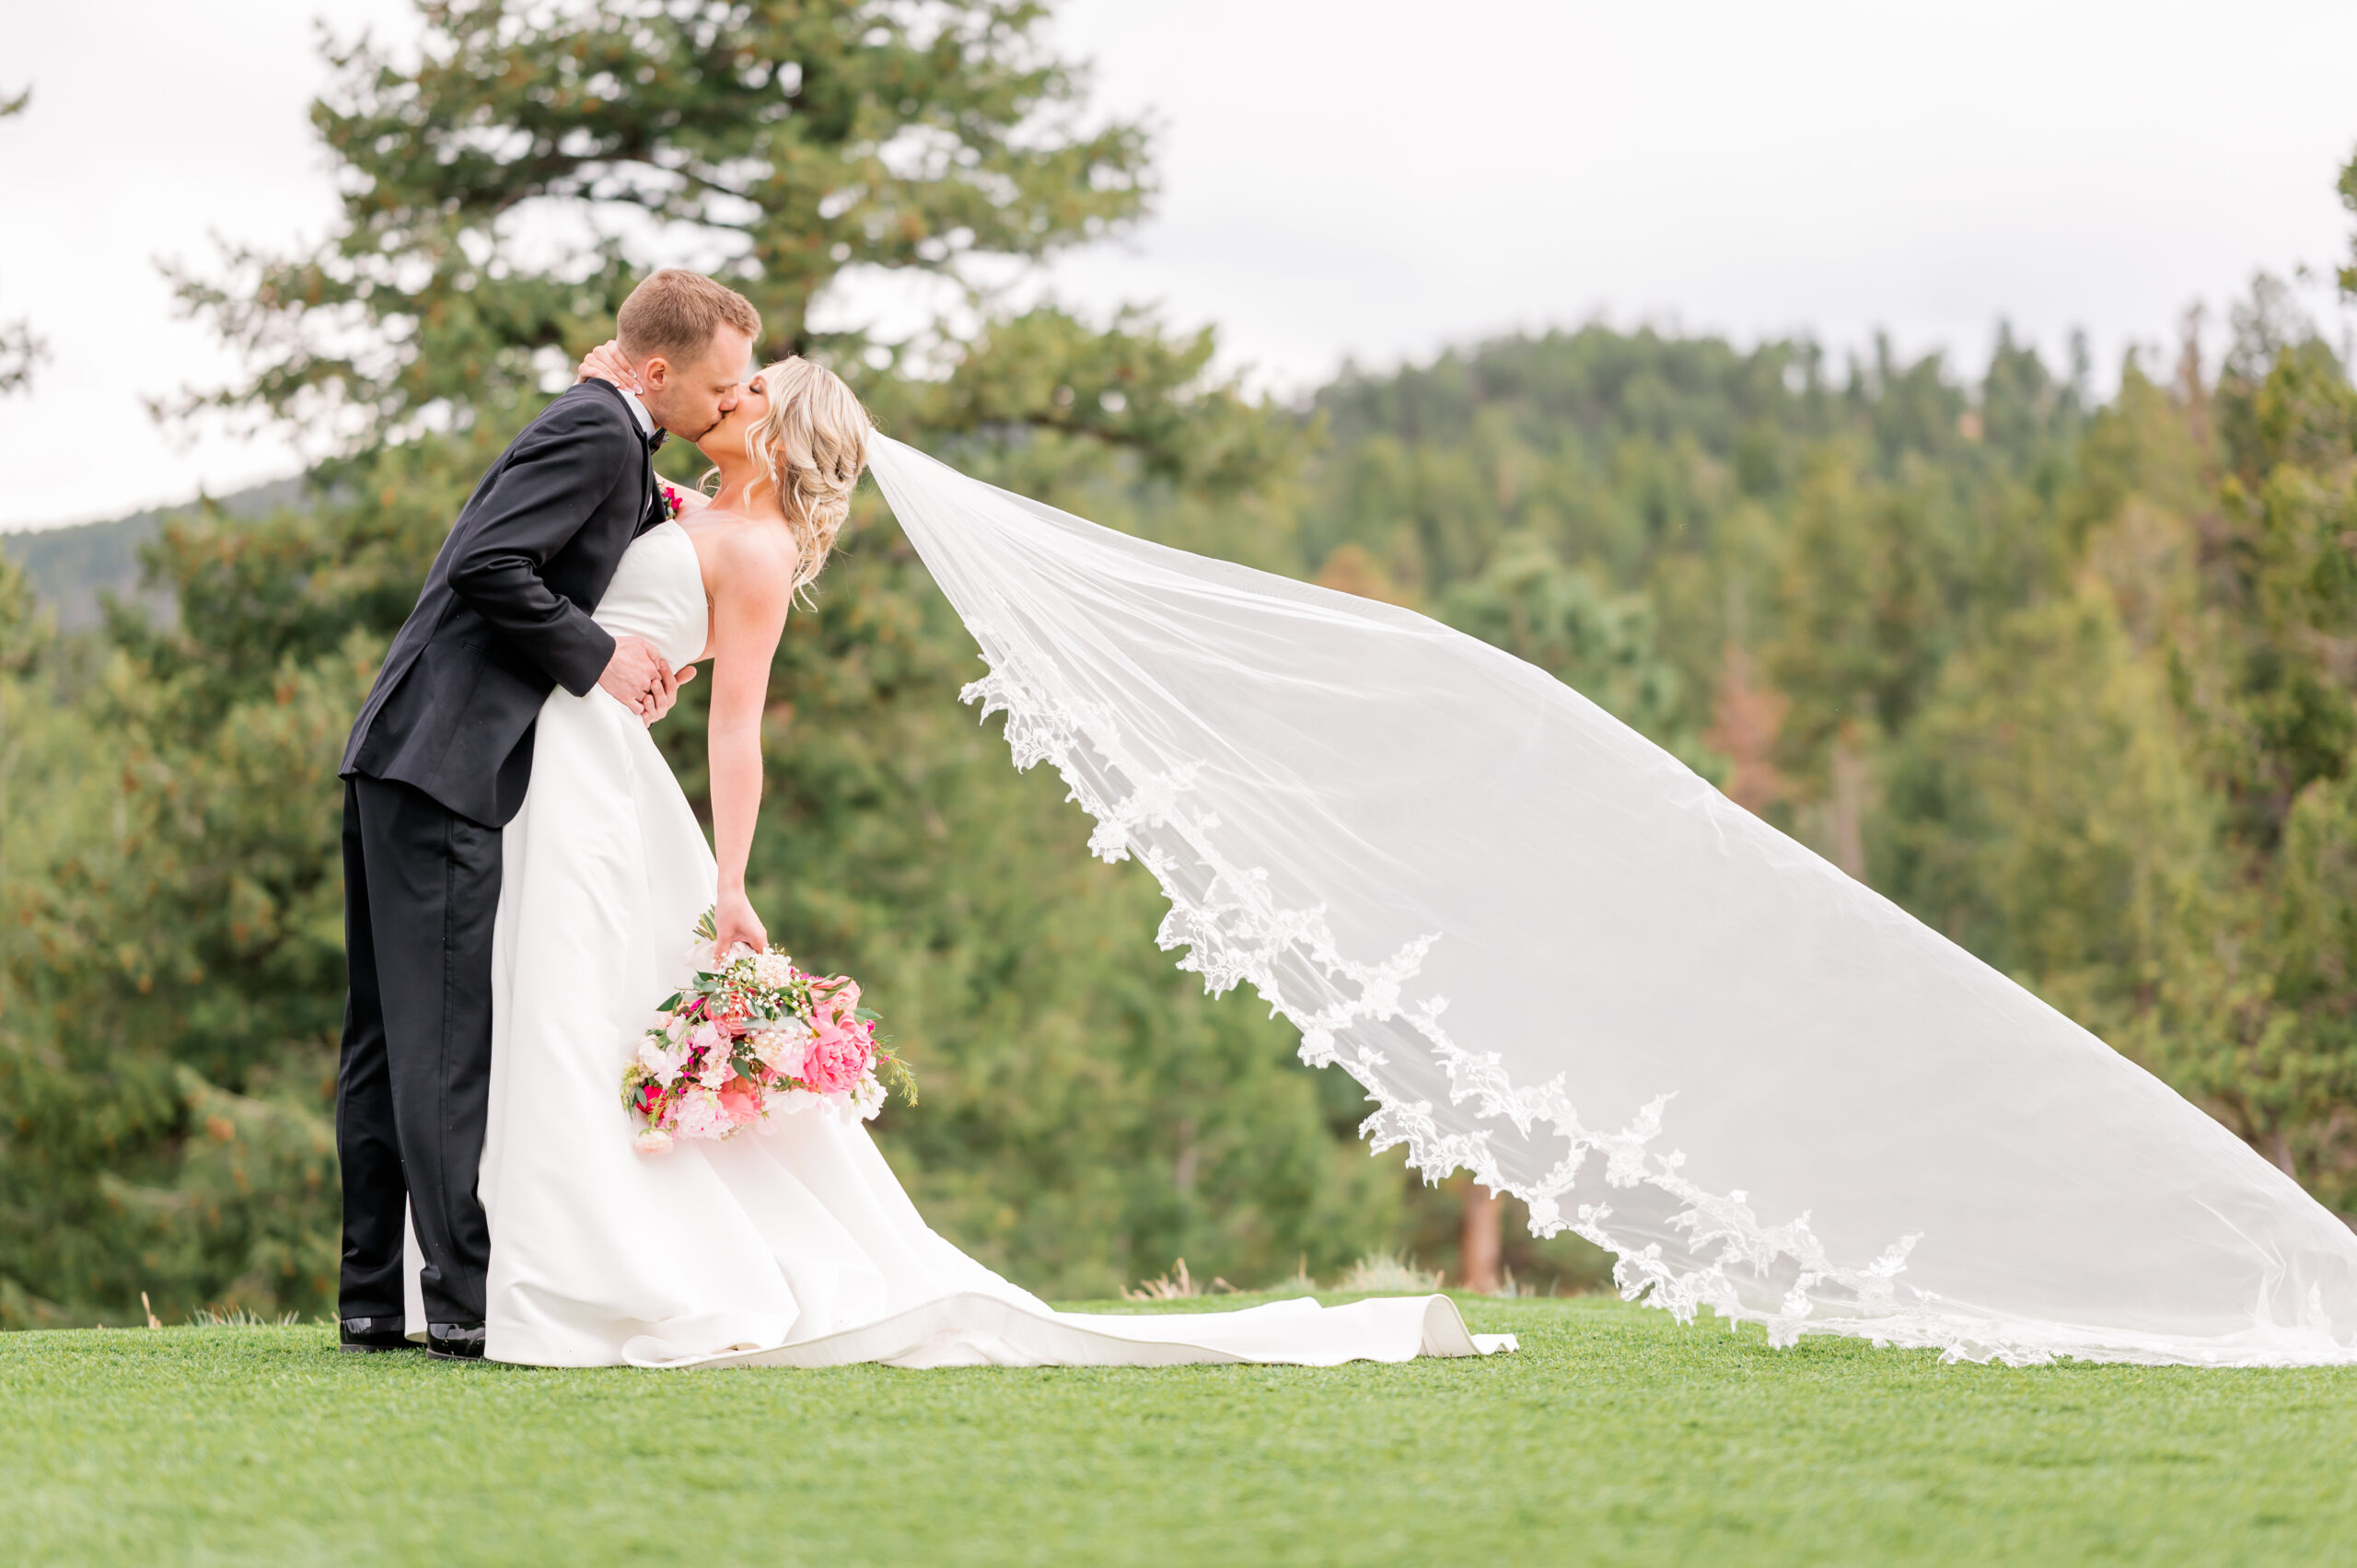 Megan + Matt's Romantic Woodlands Wedding - Britni Girard Photography